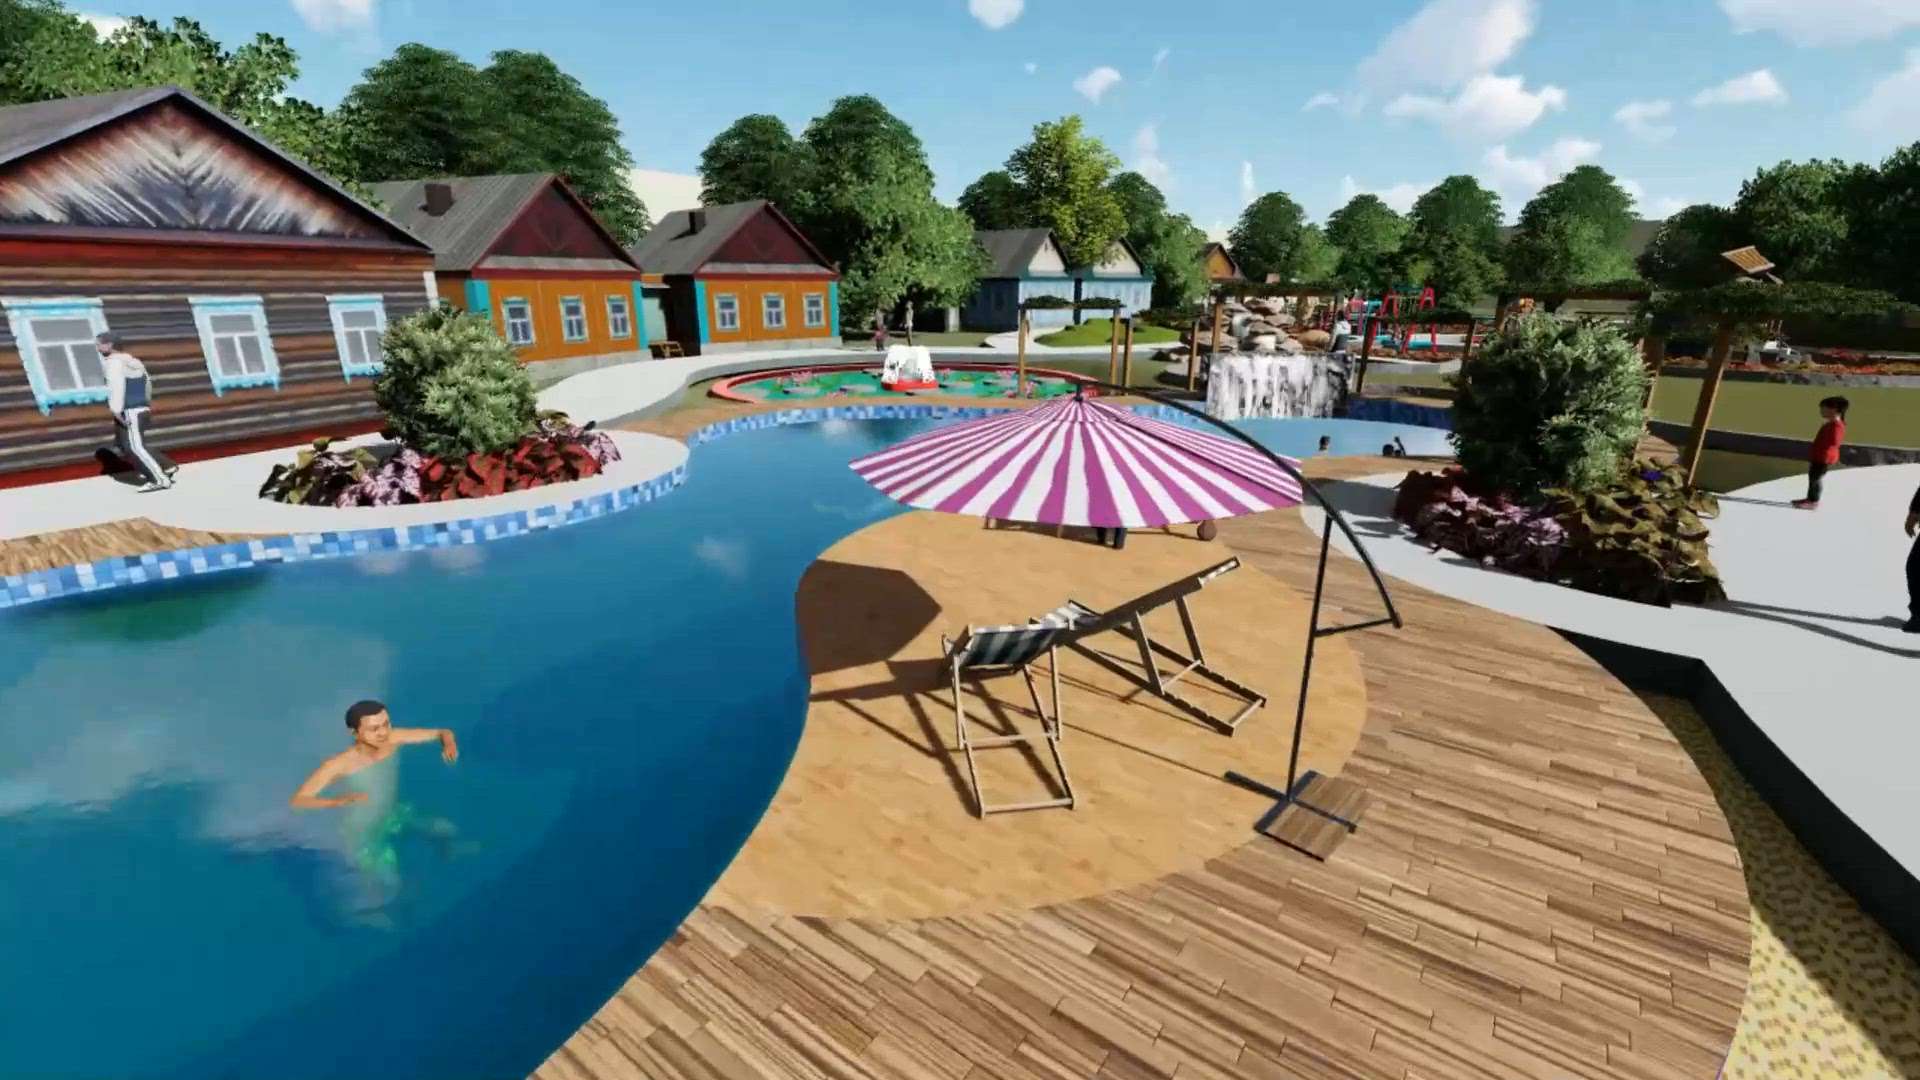 3D animation of resort
 #3d  #render3d3d #3dmodeling  #3dbuilding  #3dtoreality  #3danimation  #resort  #resorts  #resortinterior  #resortlandscape  #resortdesign  #swimmingpool  #rendering  #render3d  #renderweekly  #renderlovers  #renderingdesign   #3d_rendering